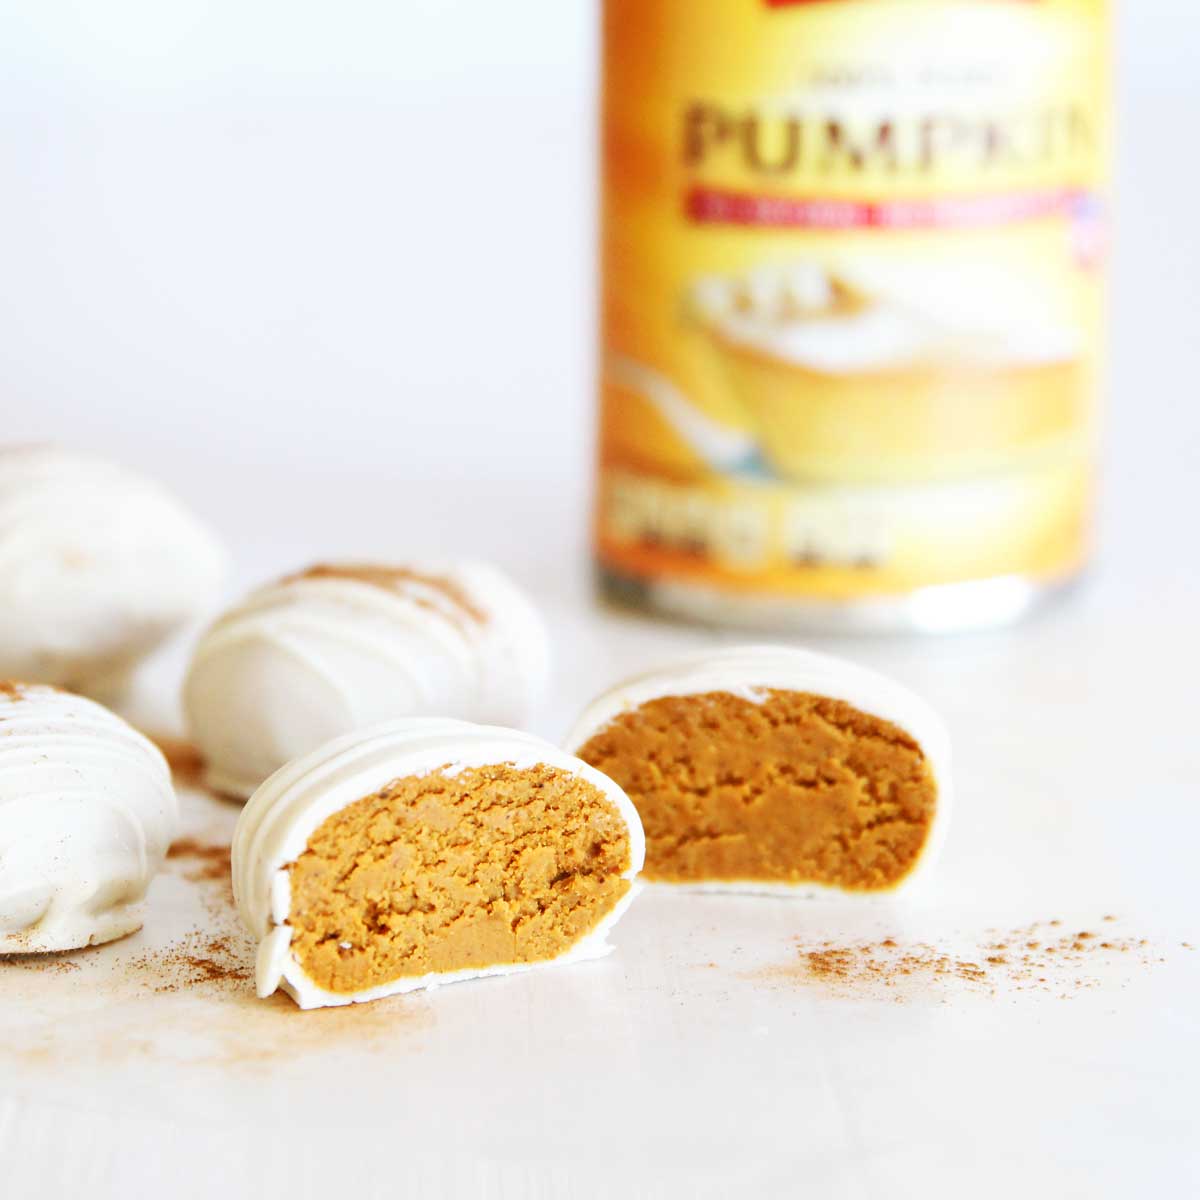 PB Fit Pumpkin Spice White Chocolate Easter Eggs (4-Ingredient Vegan Recipe!) - Roasted Corn Naan